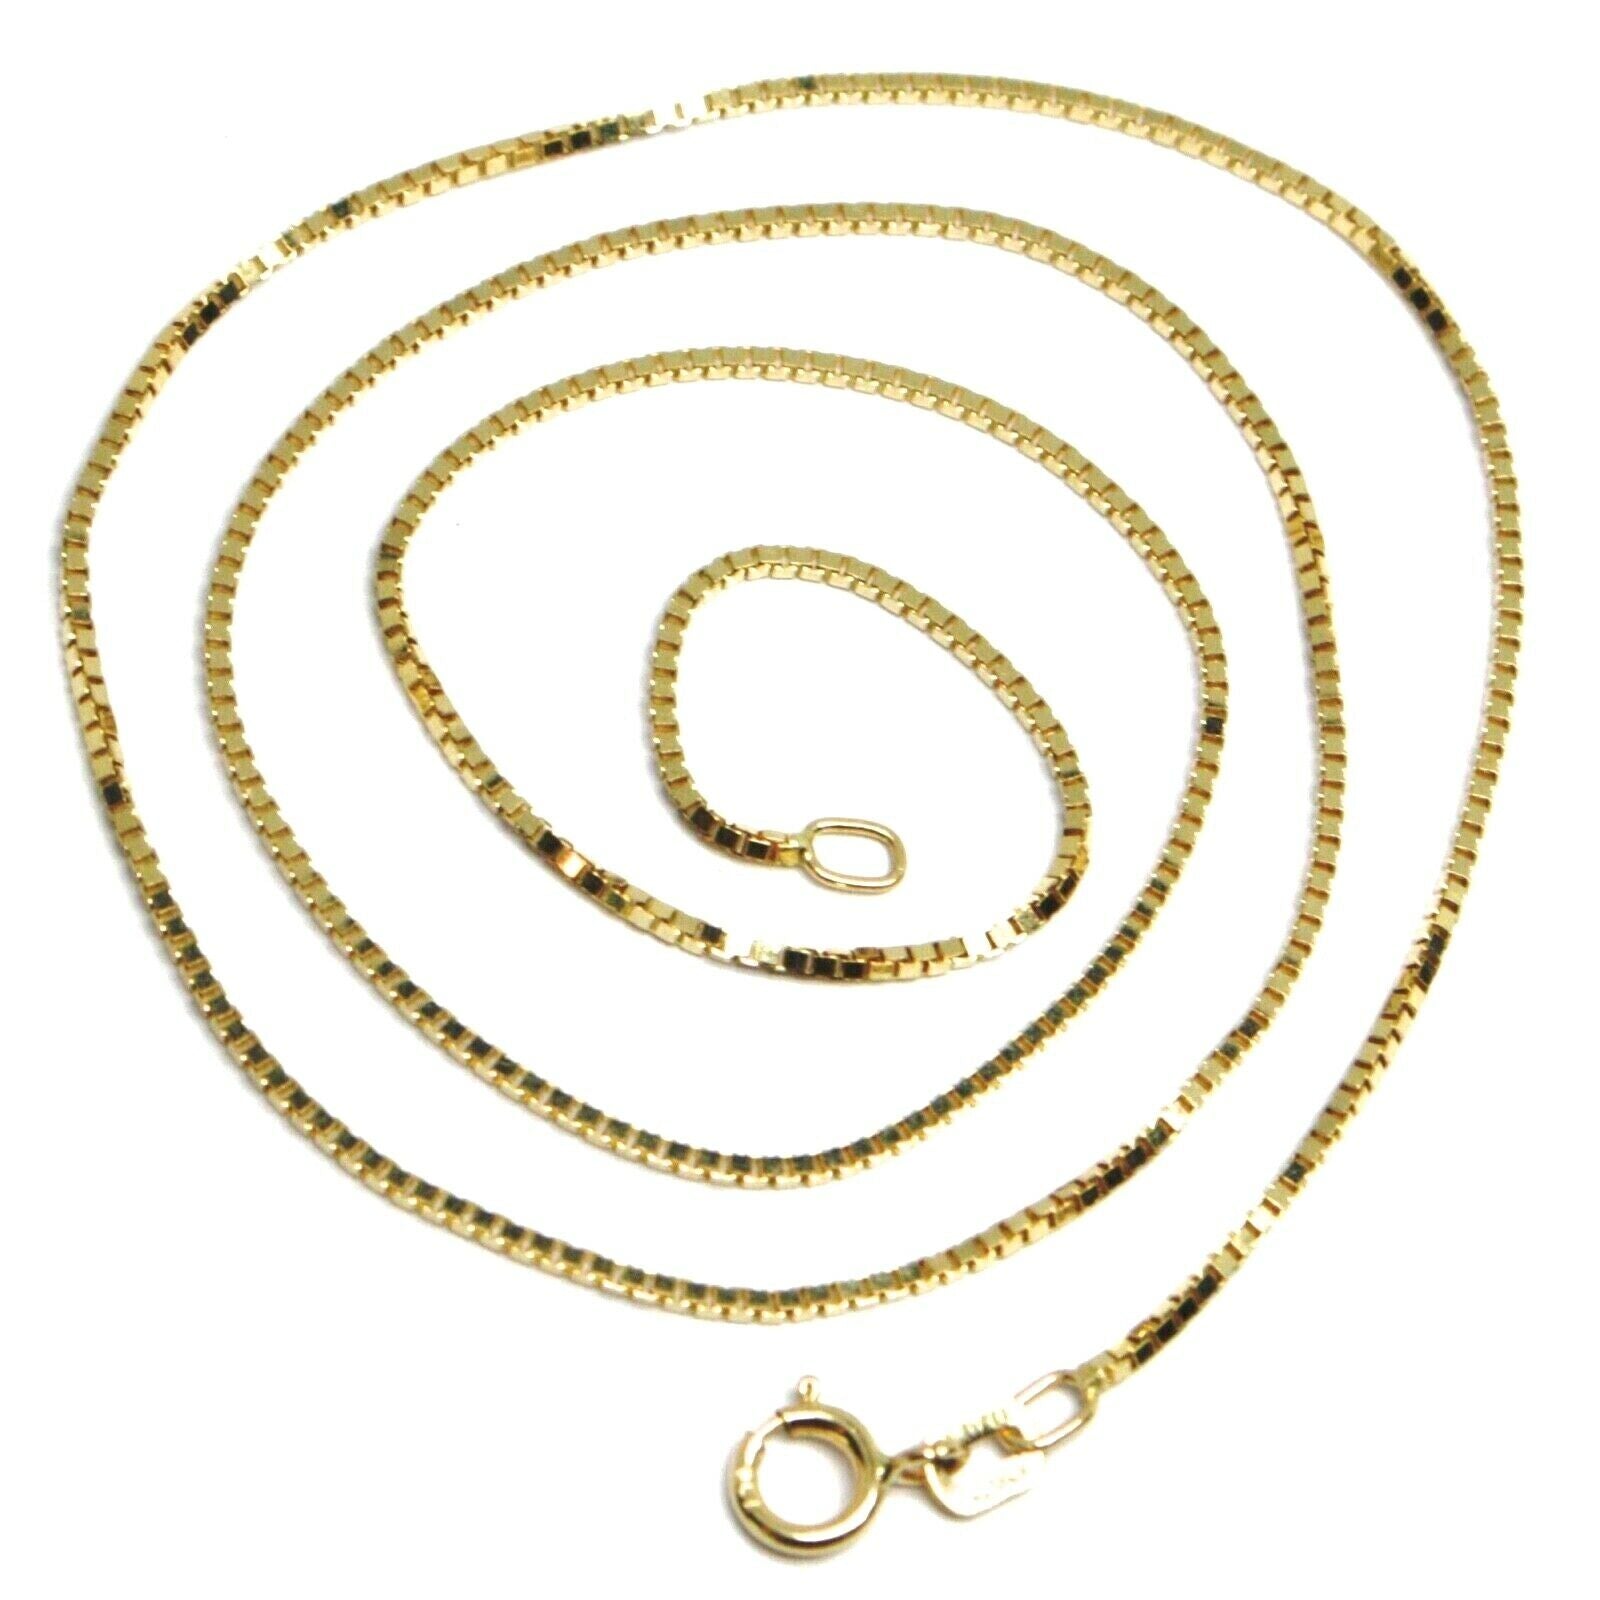 1.5mm Venetian Necklace Chain